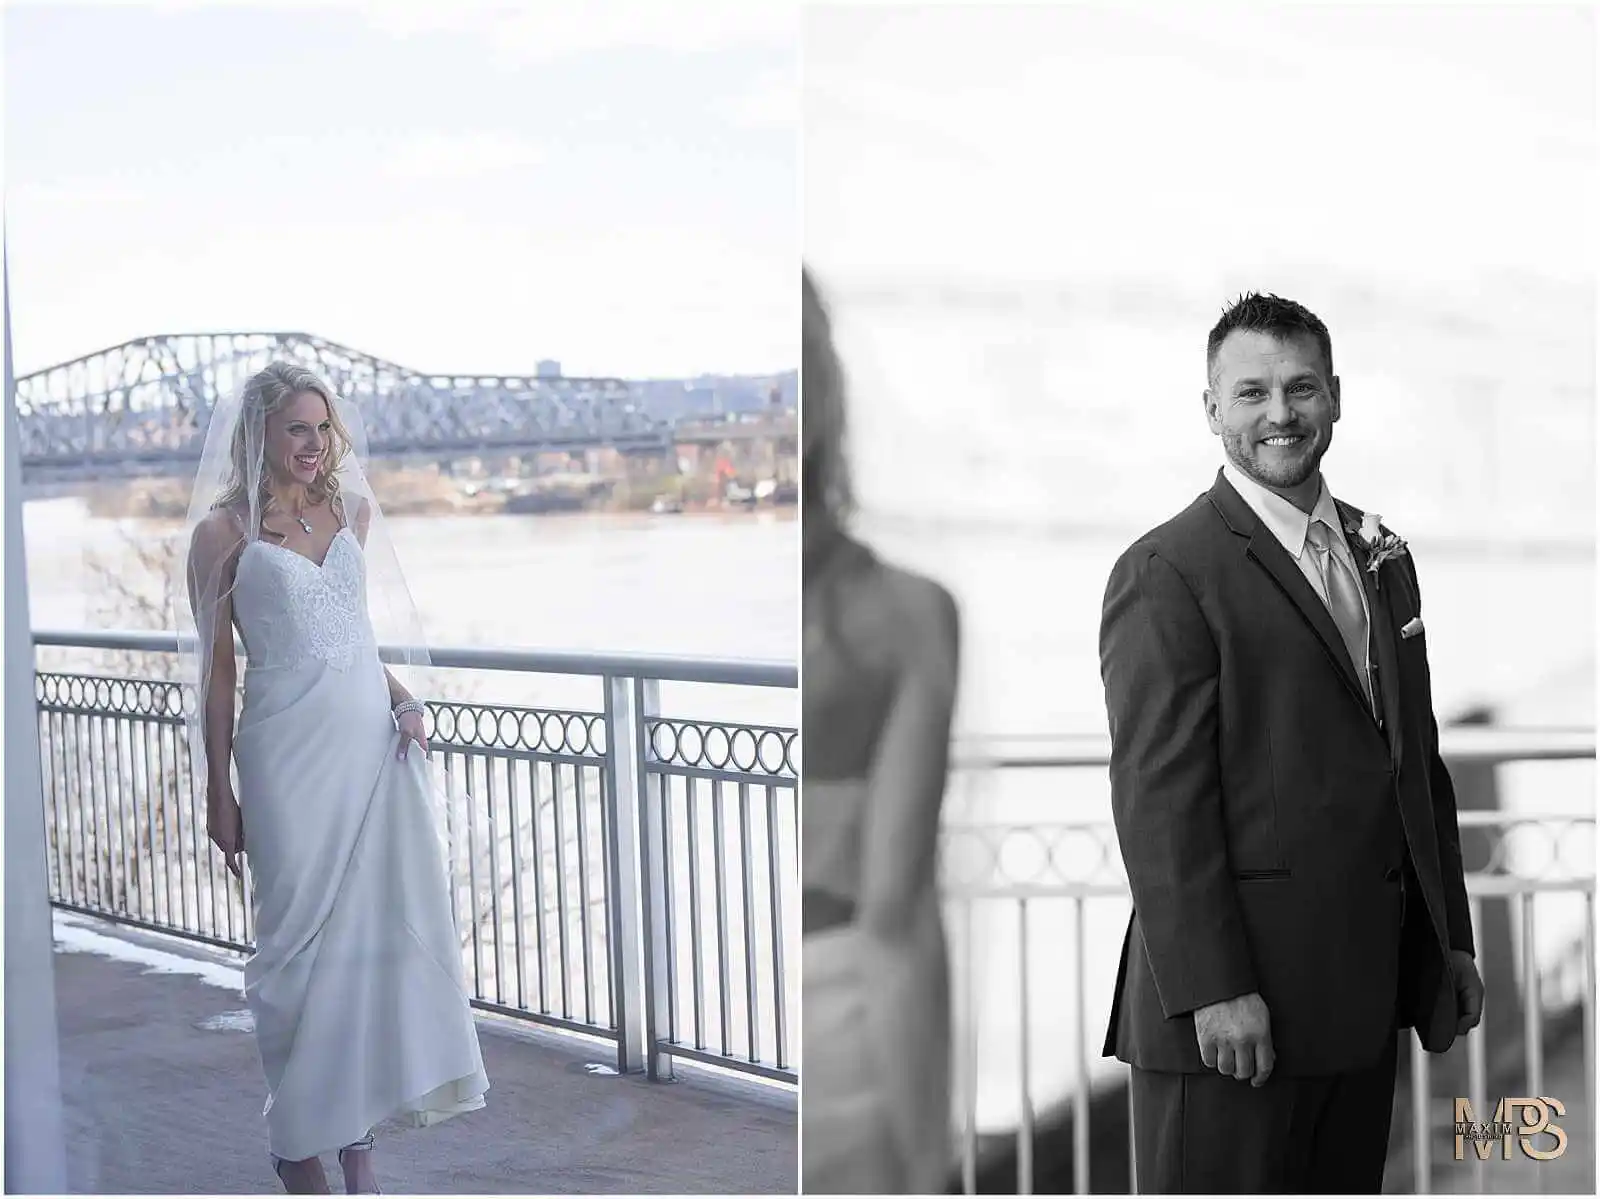 Bride and groom posing separately with scenic river bridge background Marriott Rivercenter Covington KY